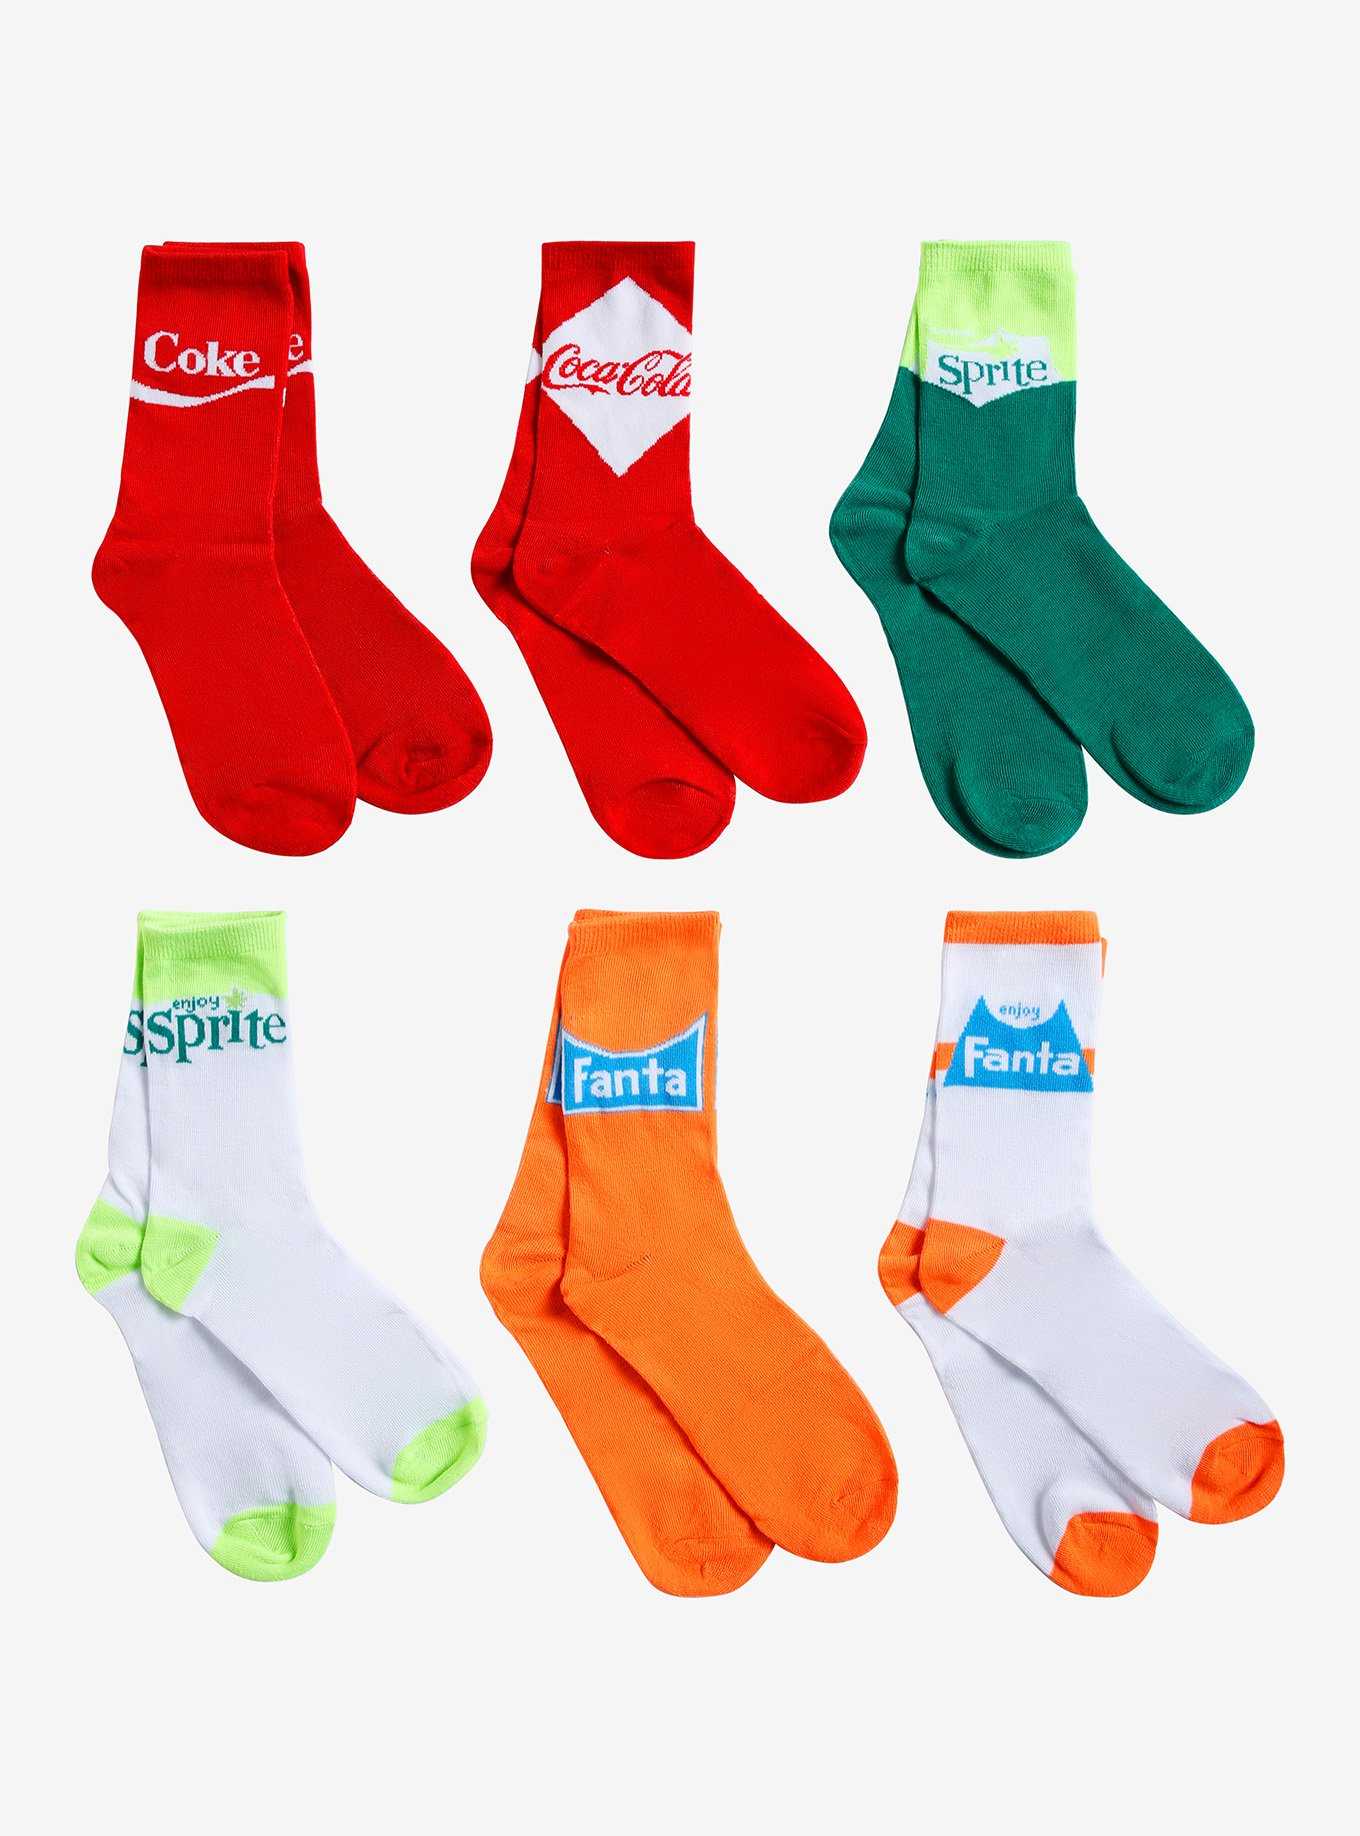 Coca-Cola Soft Drinks Crew Socks 6 Pair, , hi-res